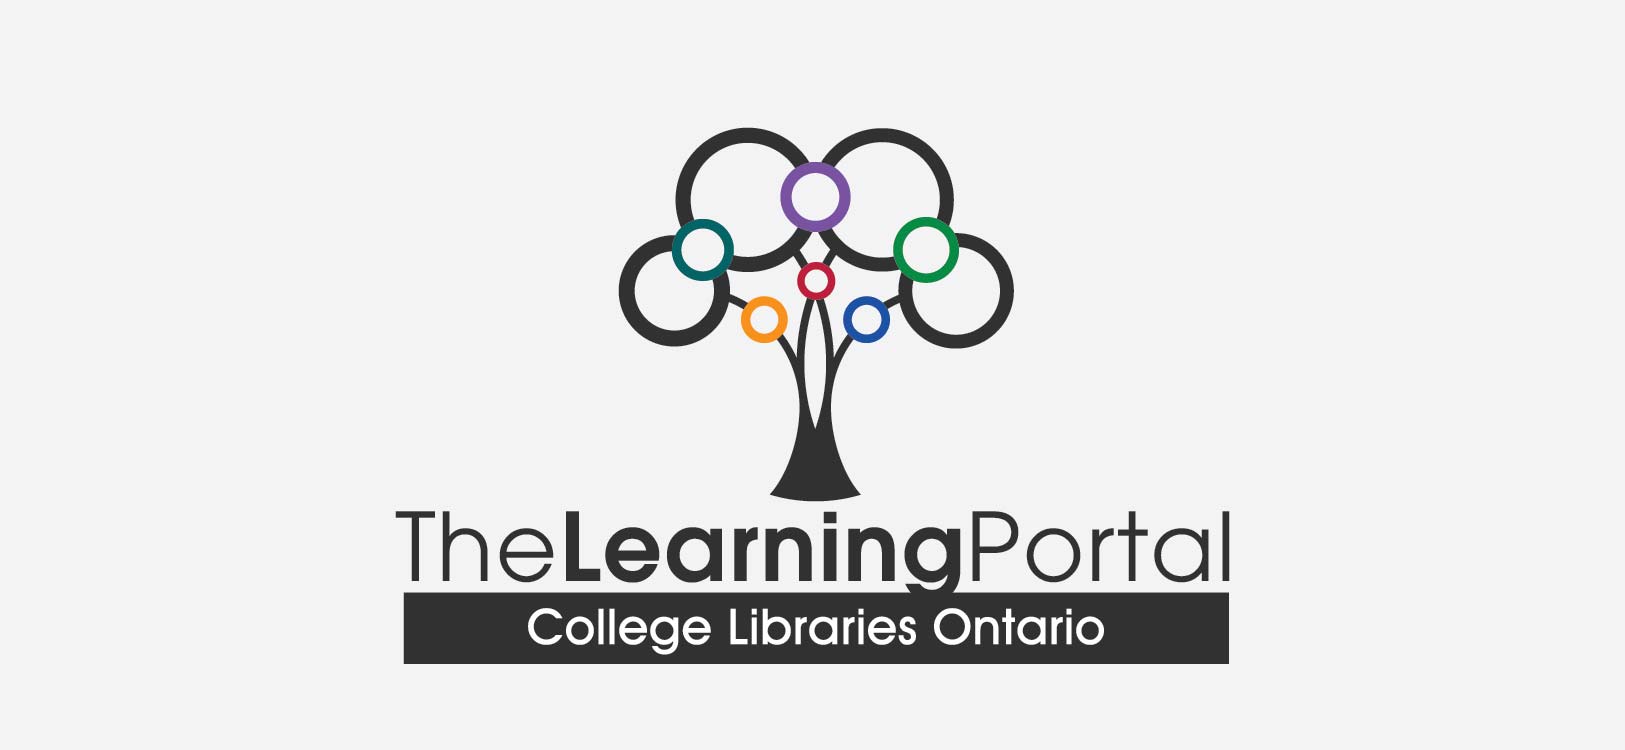 The Learning Portal logo